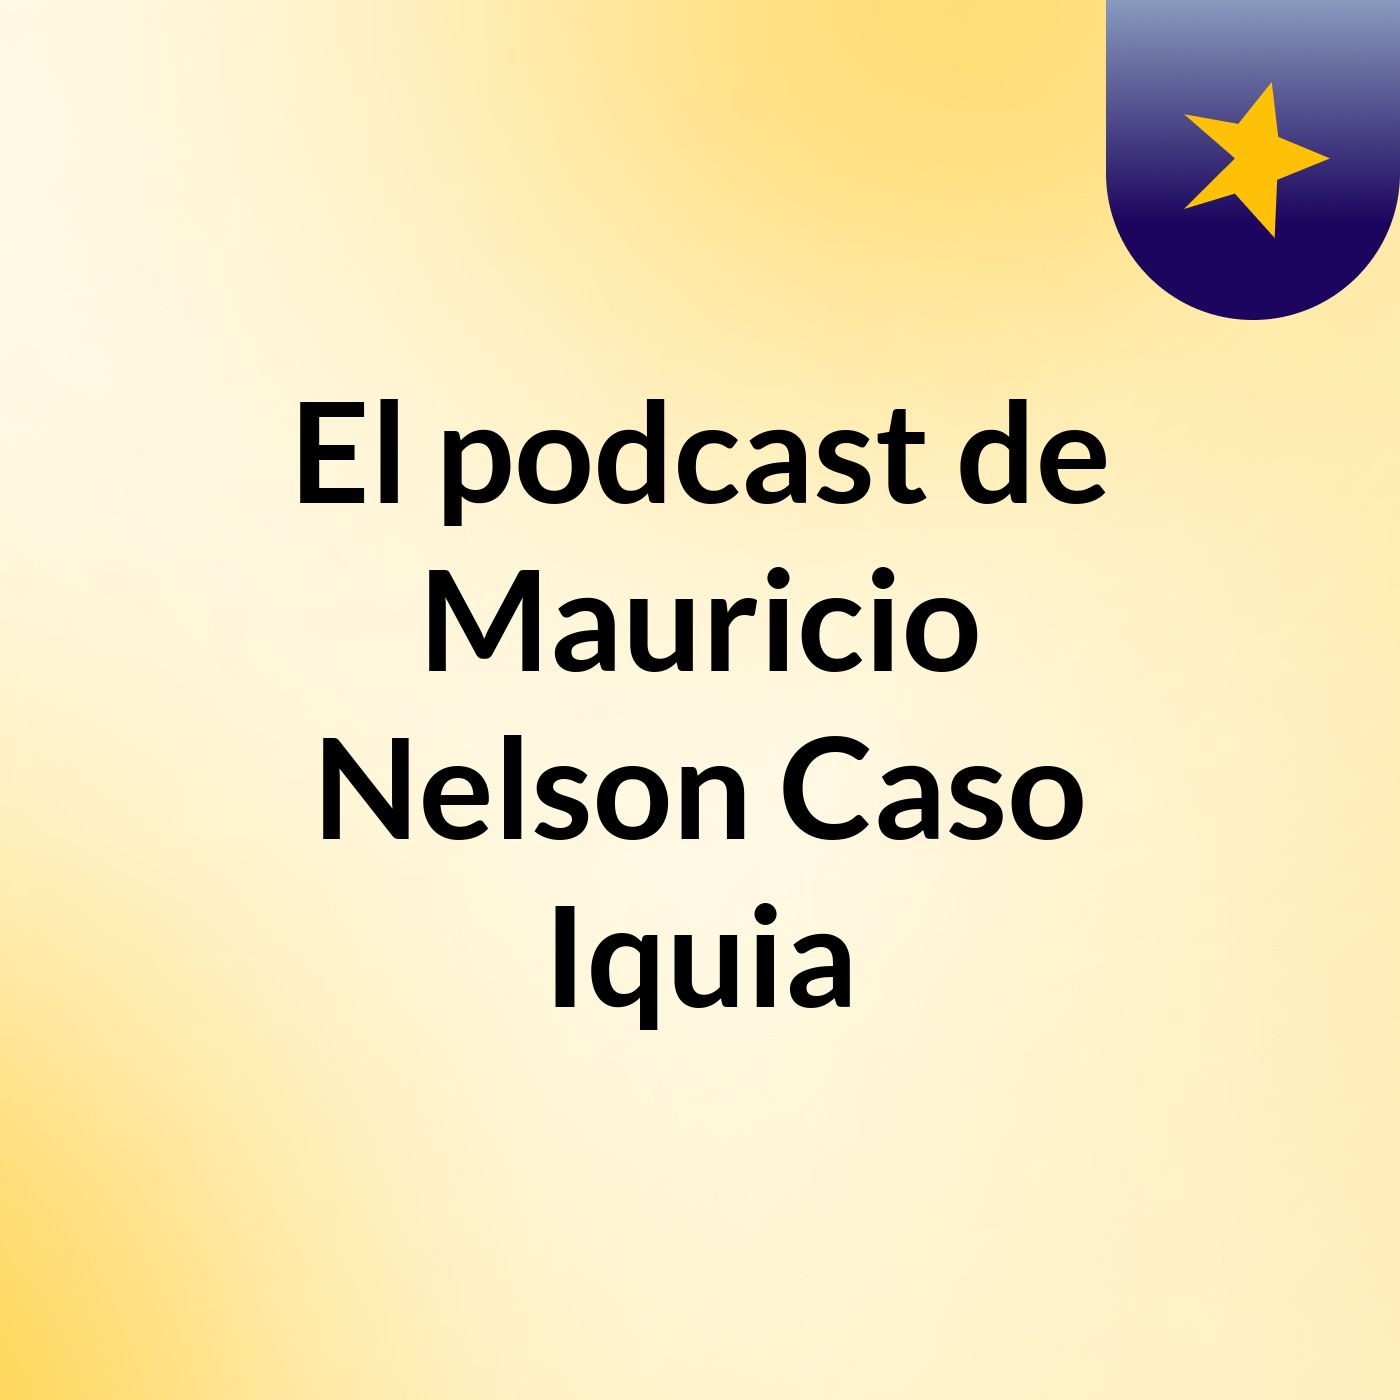 El podcast de Mauricio Nelson Caso Iquia